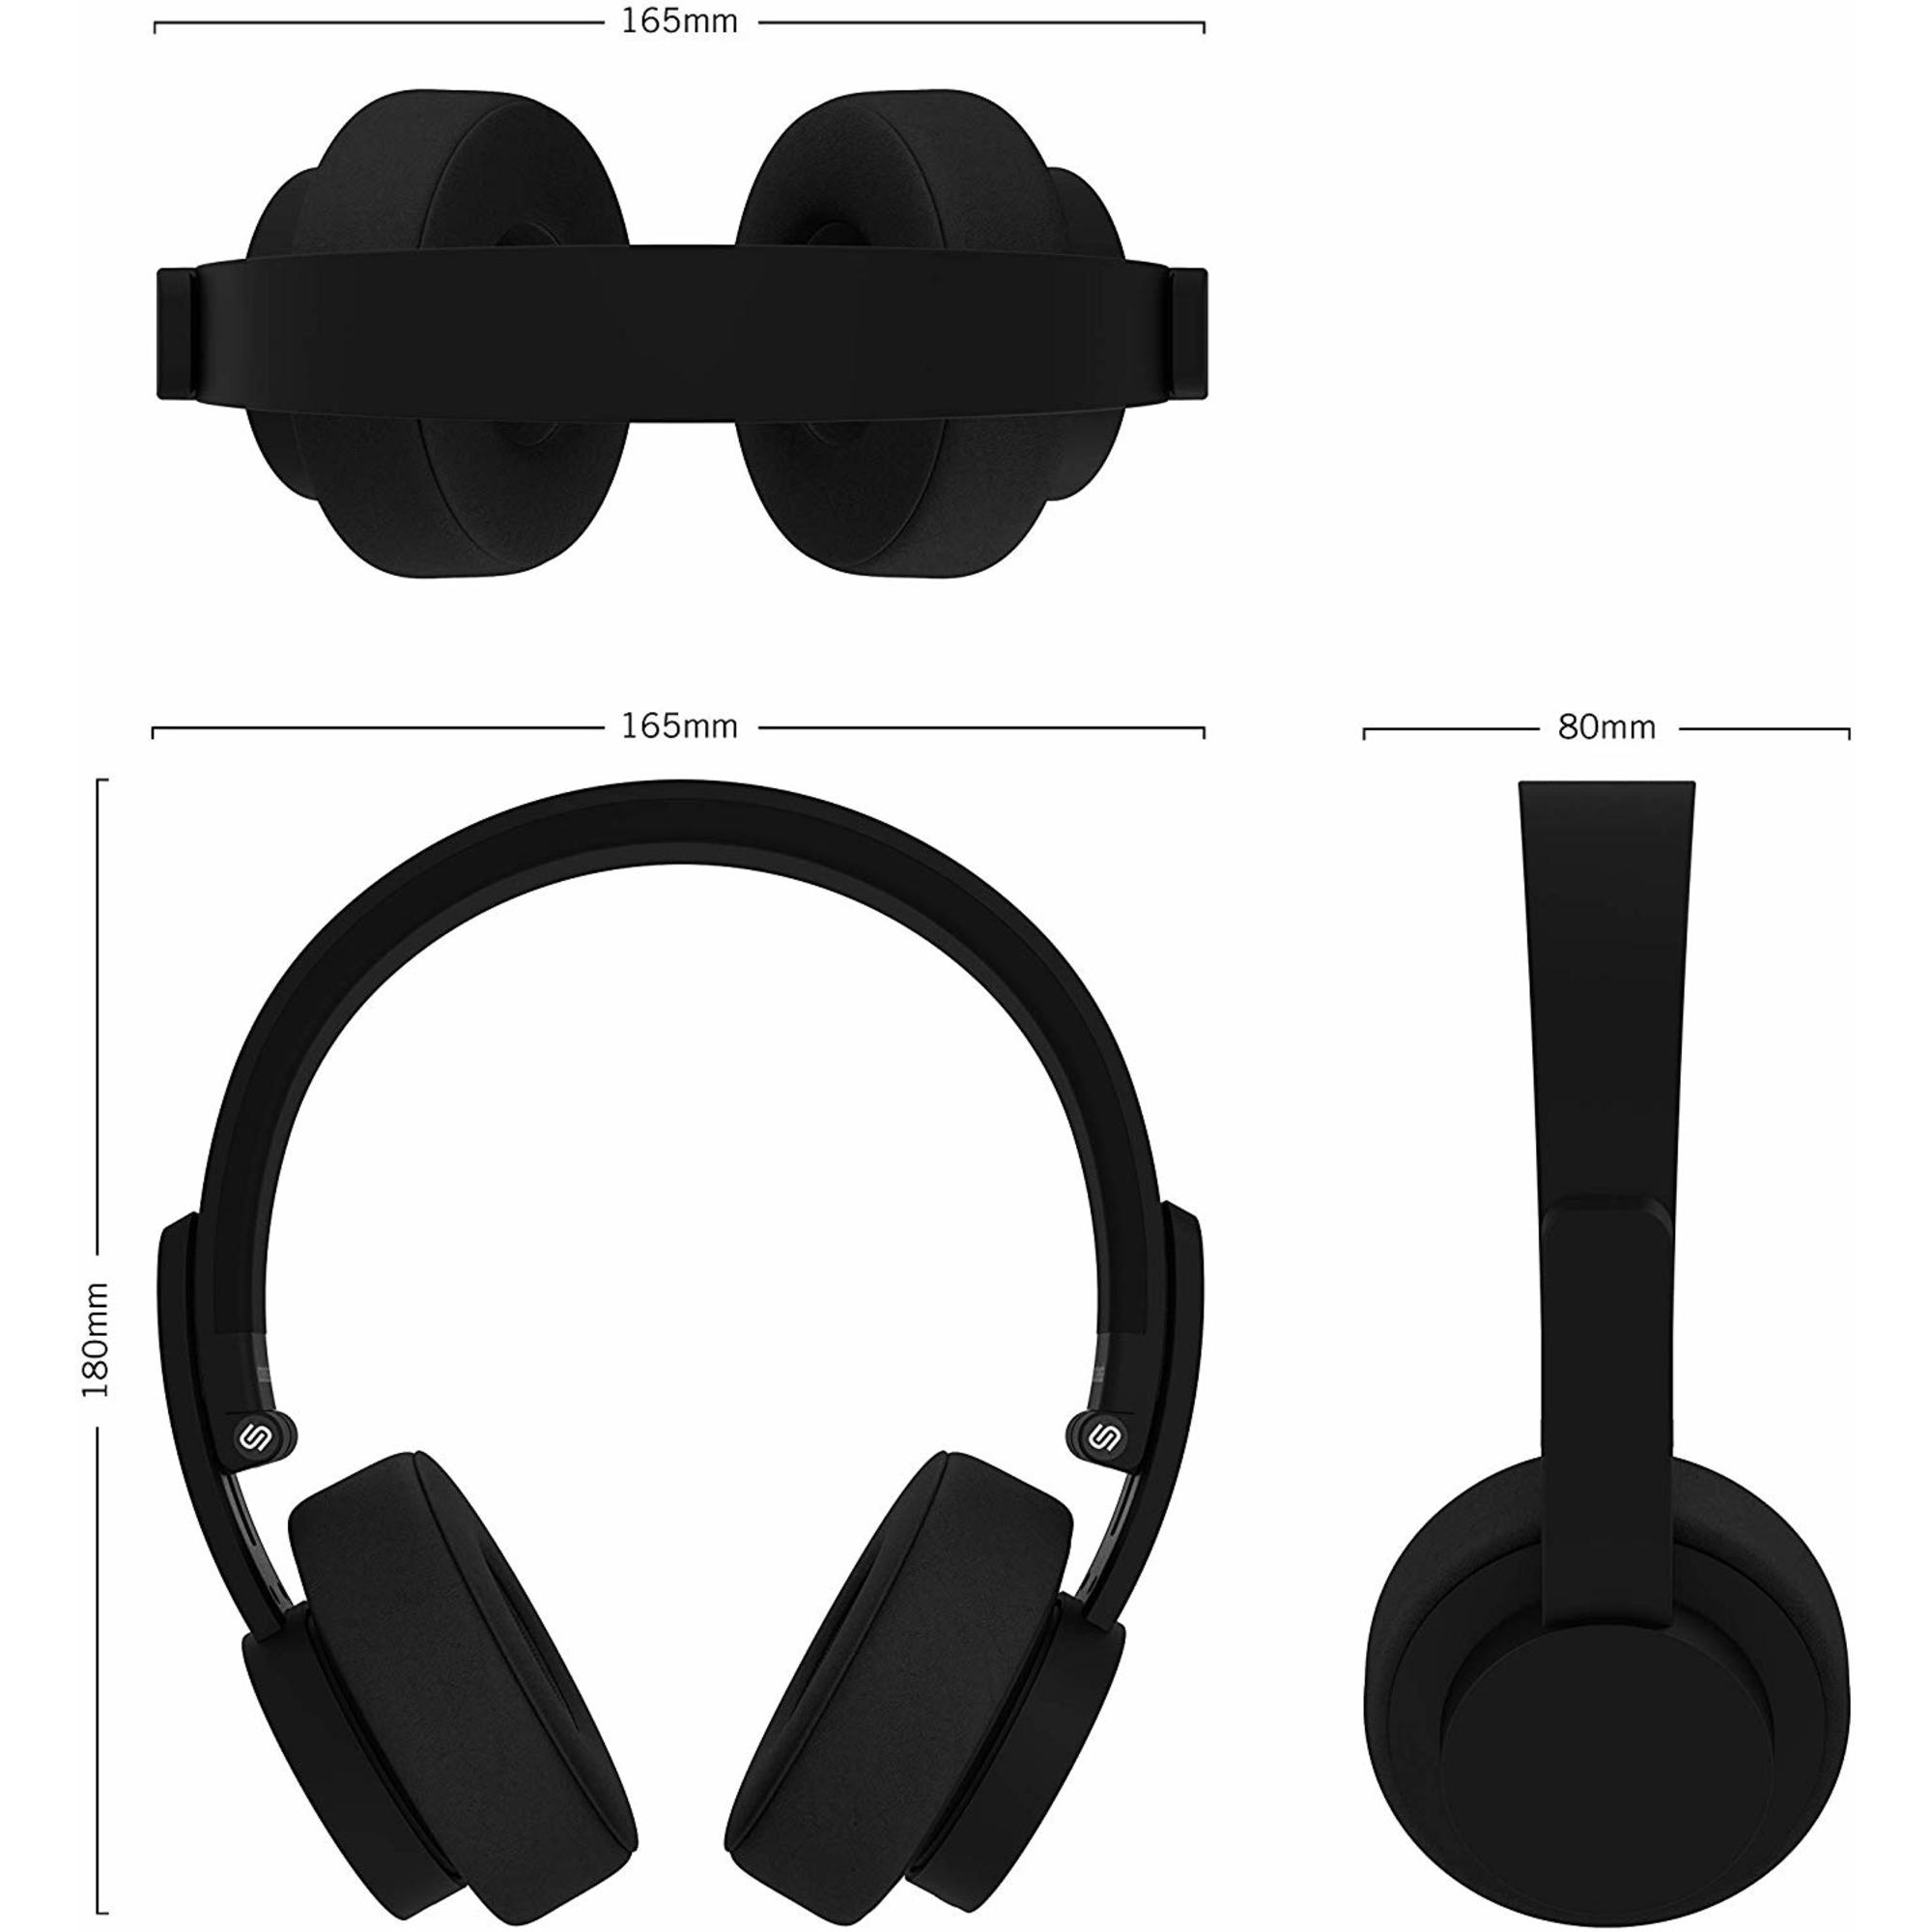 Urbanista Seattle Bluetooth On-Ear Headphones, Dark Clown, 1033702 - image 4 of 4